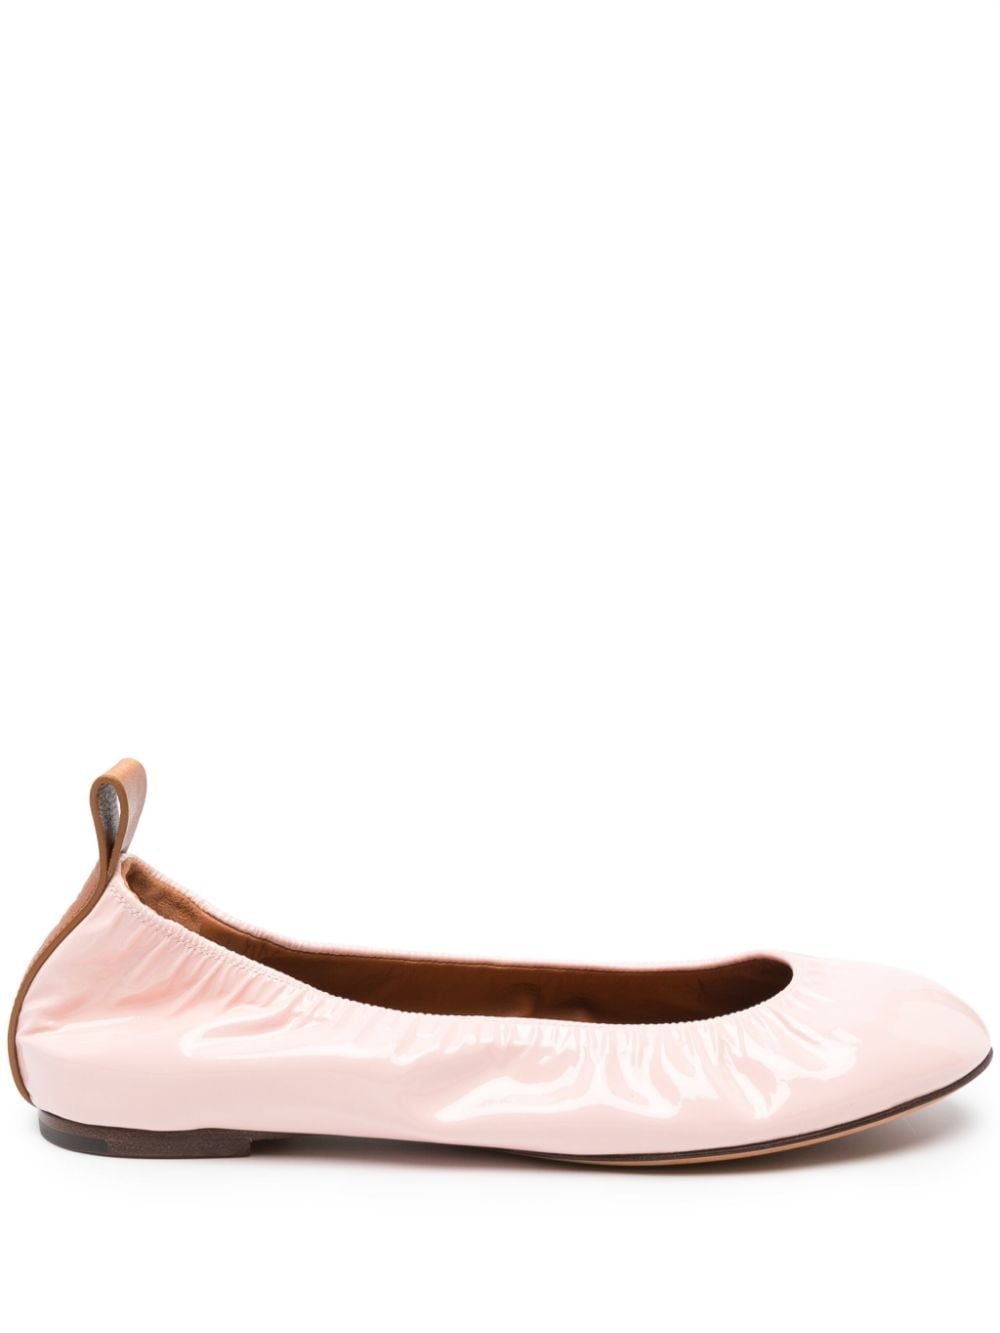 Lanvin Ballerina patent-leather shoes - Pink von Lanvin